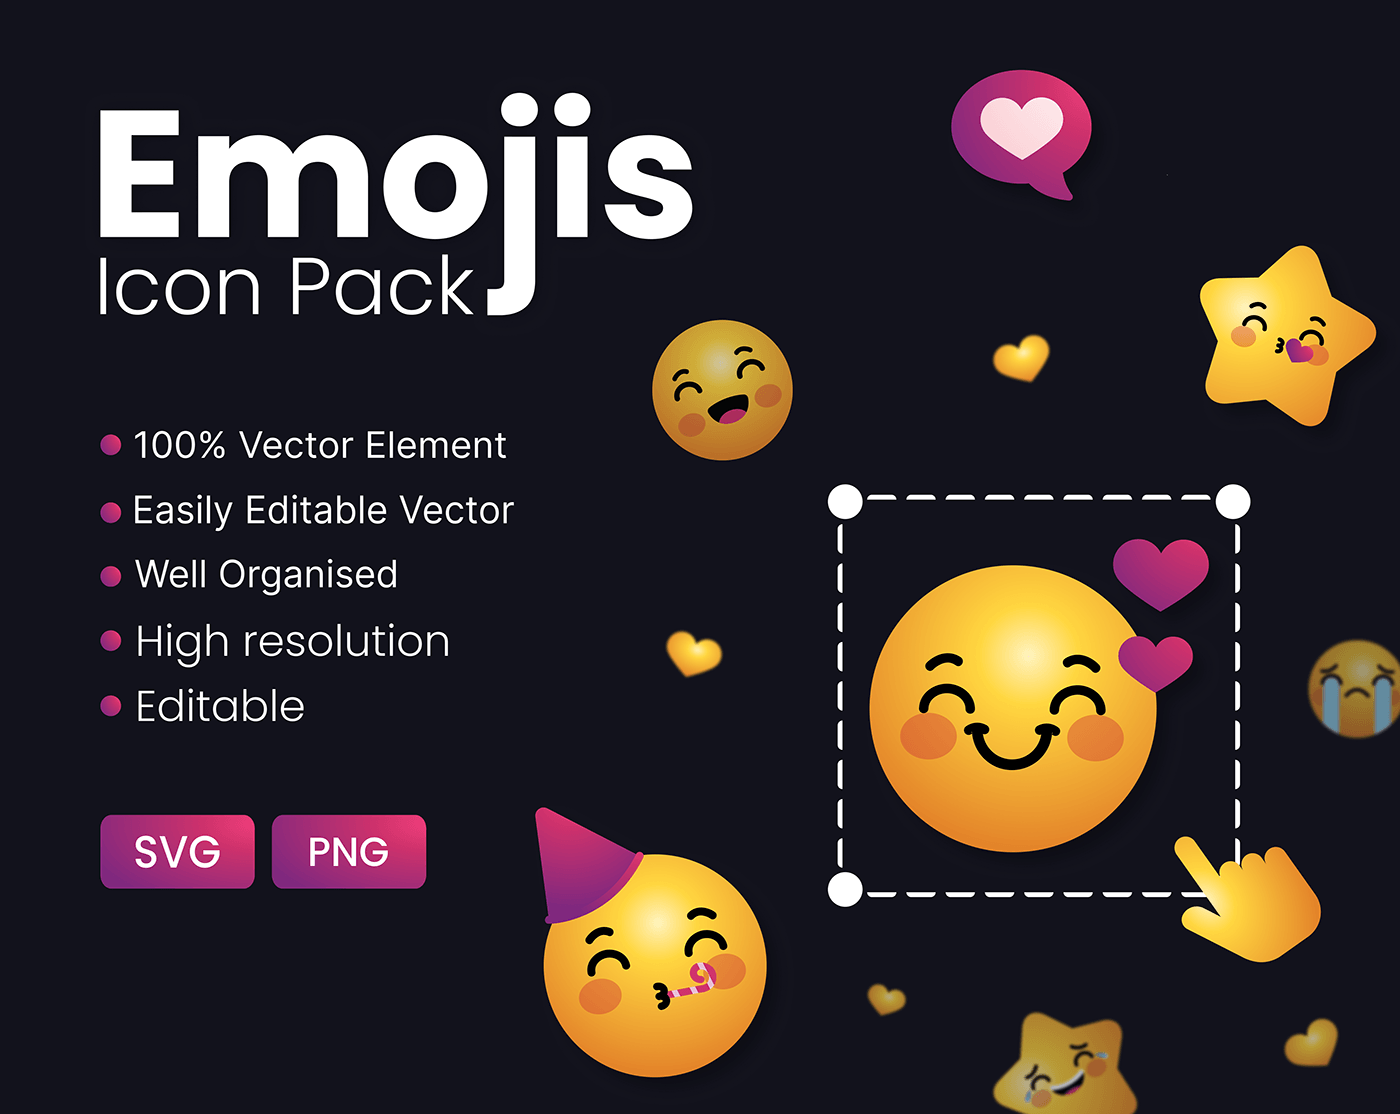 Emoji icons svg heart smile stars icon design  iconography icon set icon pack